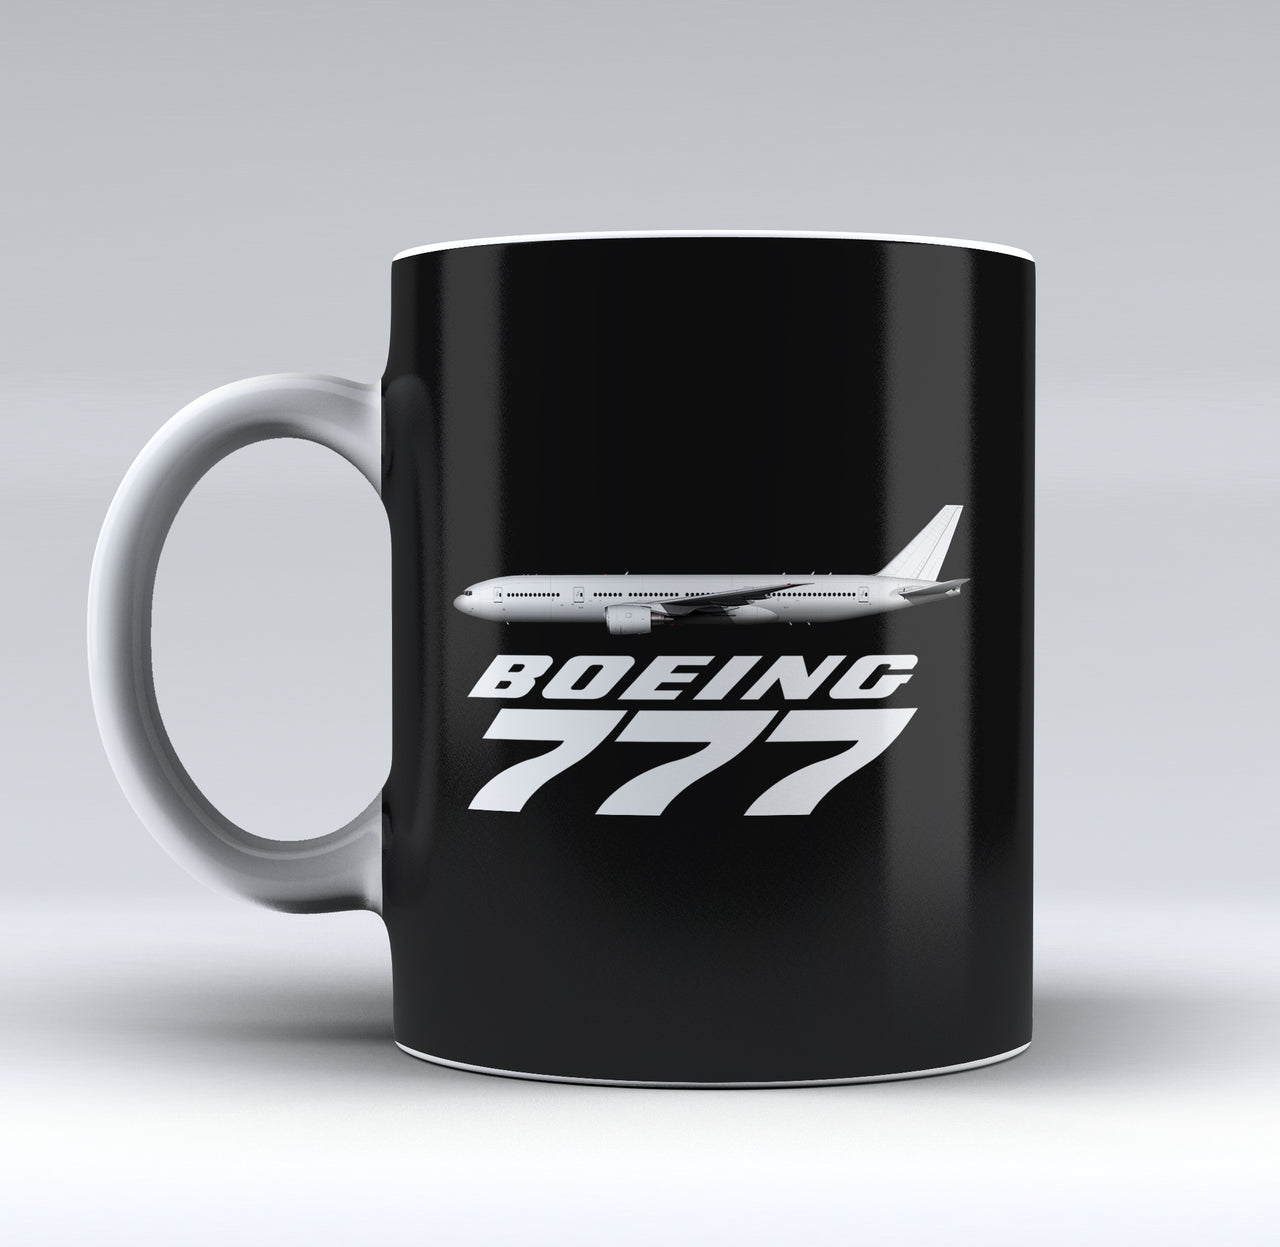 The Boeing 777 Designed Mugs